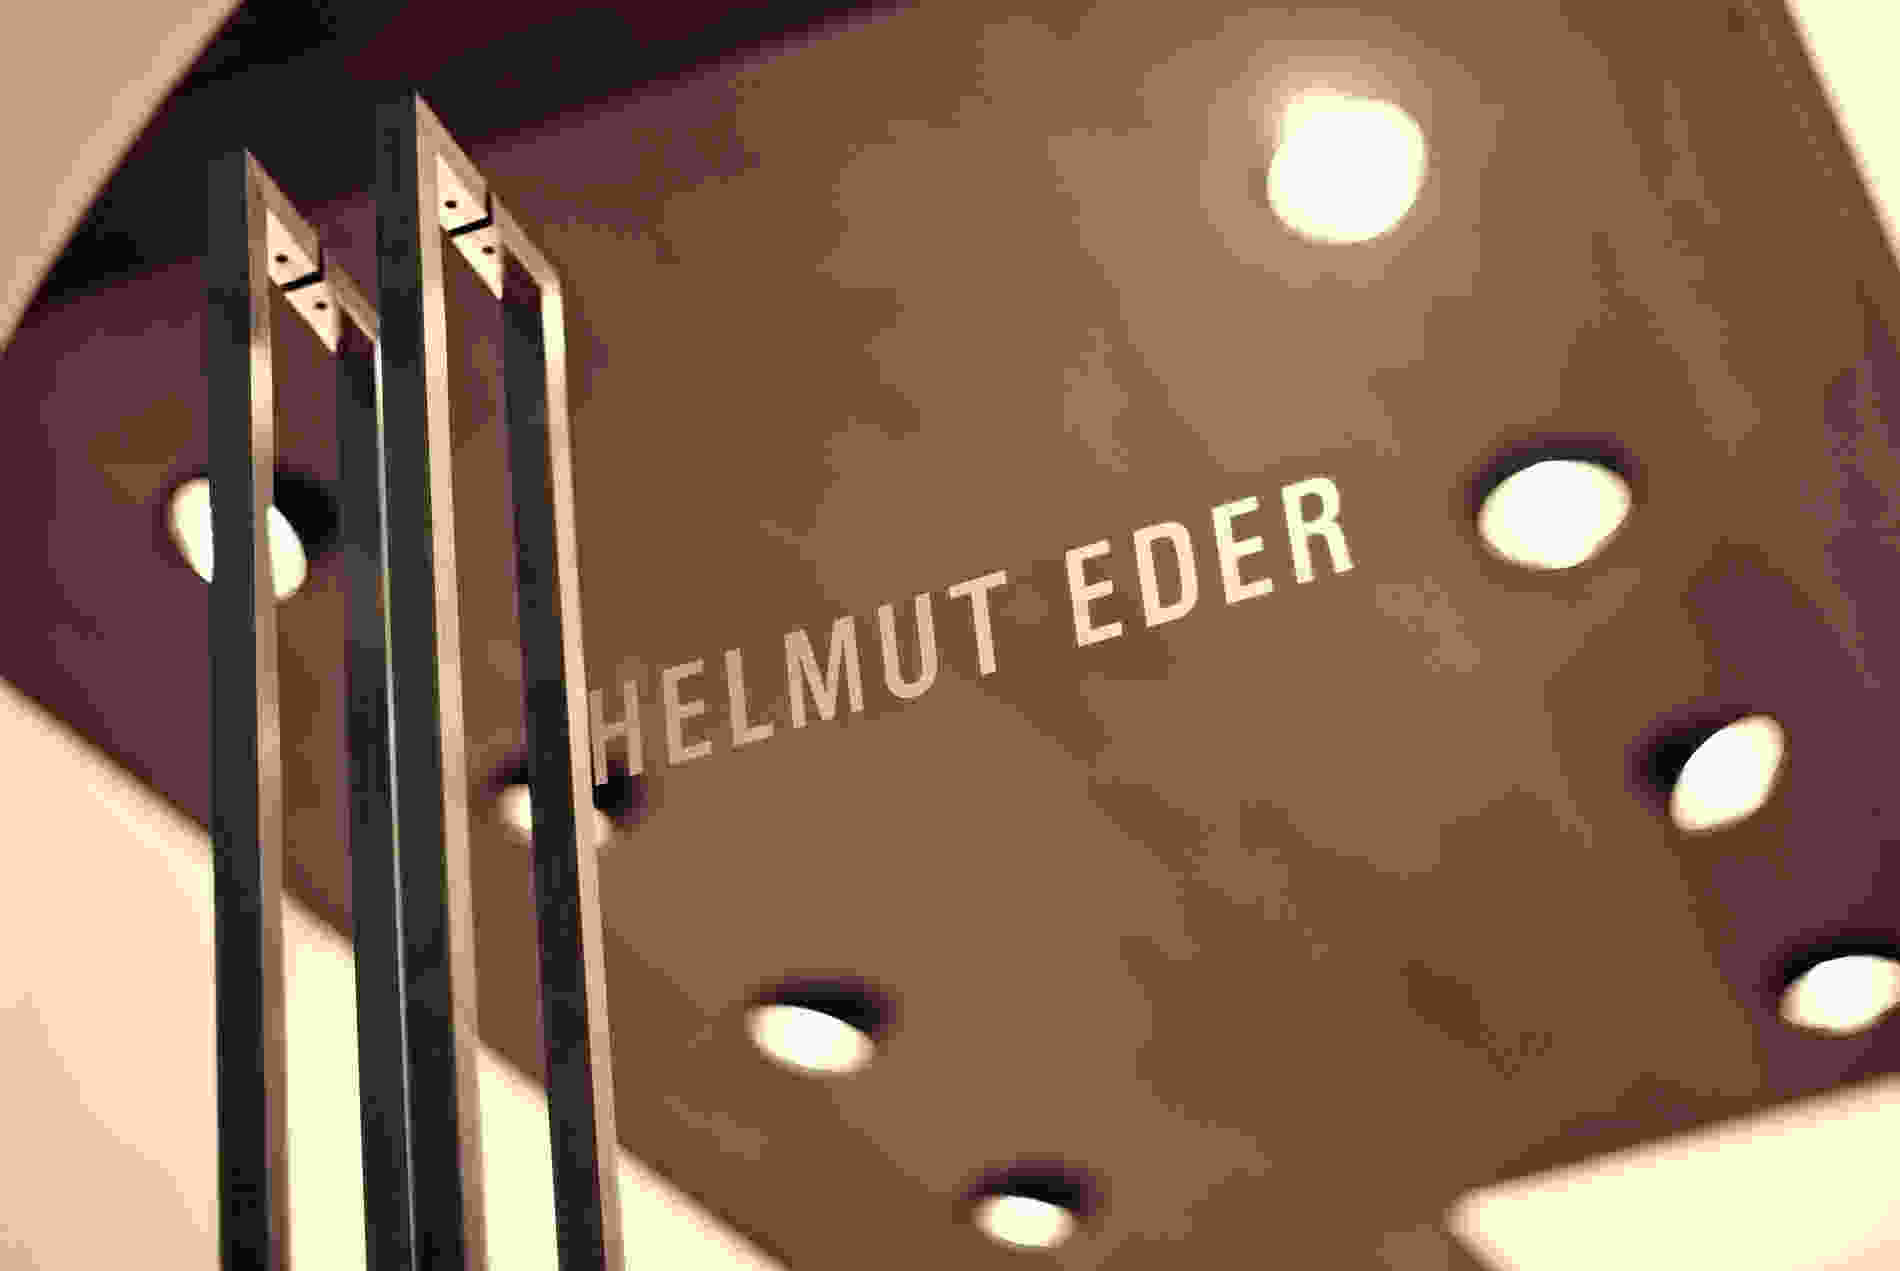 196 Womans Fashion Shop Helmut Eder 001 logo